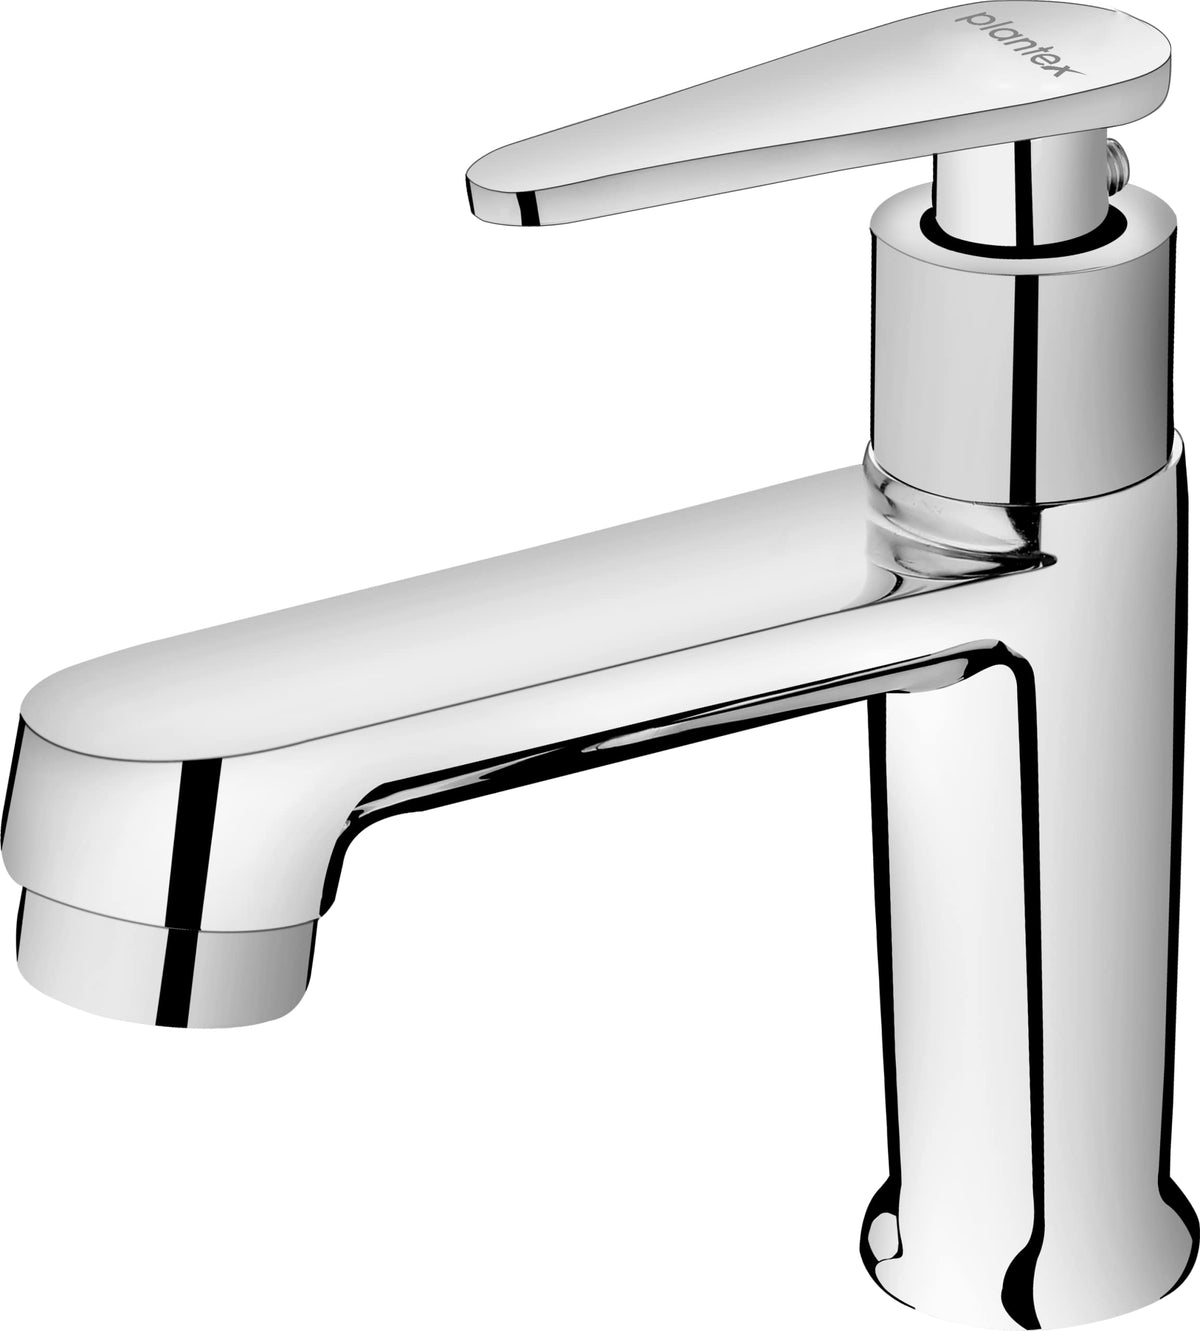 Plantex Pure Brass LEA-703 Single Lever Pillar Cock/Bathroom Wash Basin Tap/Water Faucet for Kitchen Sink with Teflon Tape (Mirror-Chrome Finish)